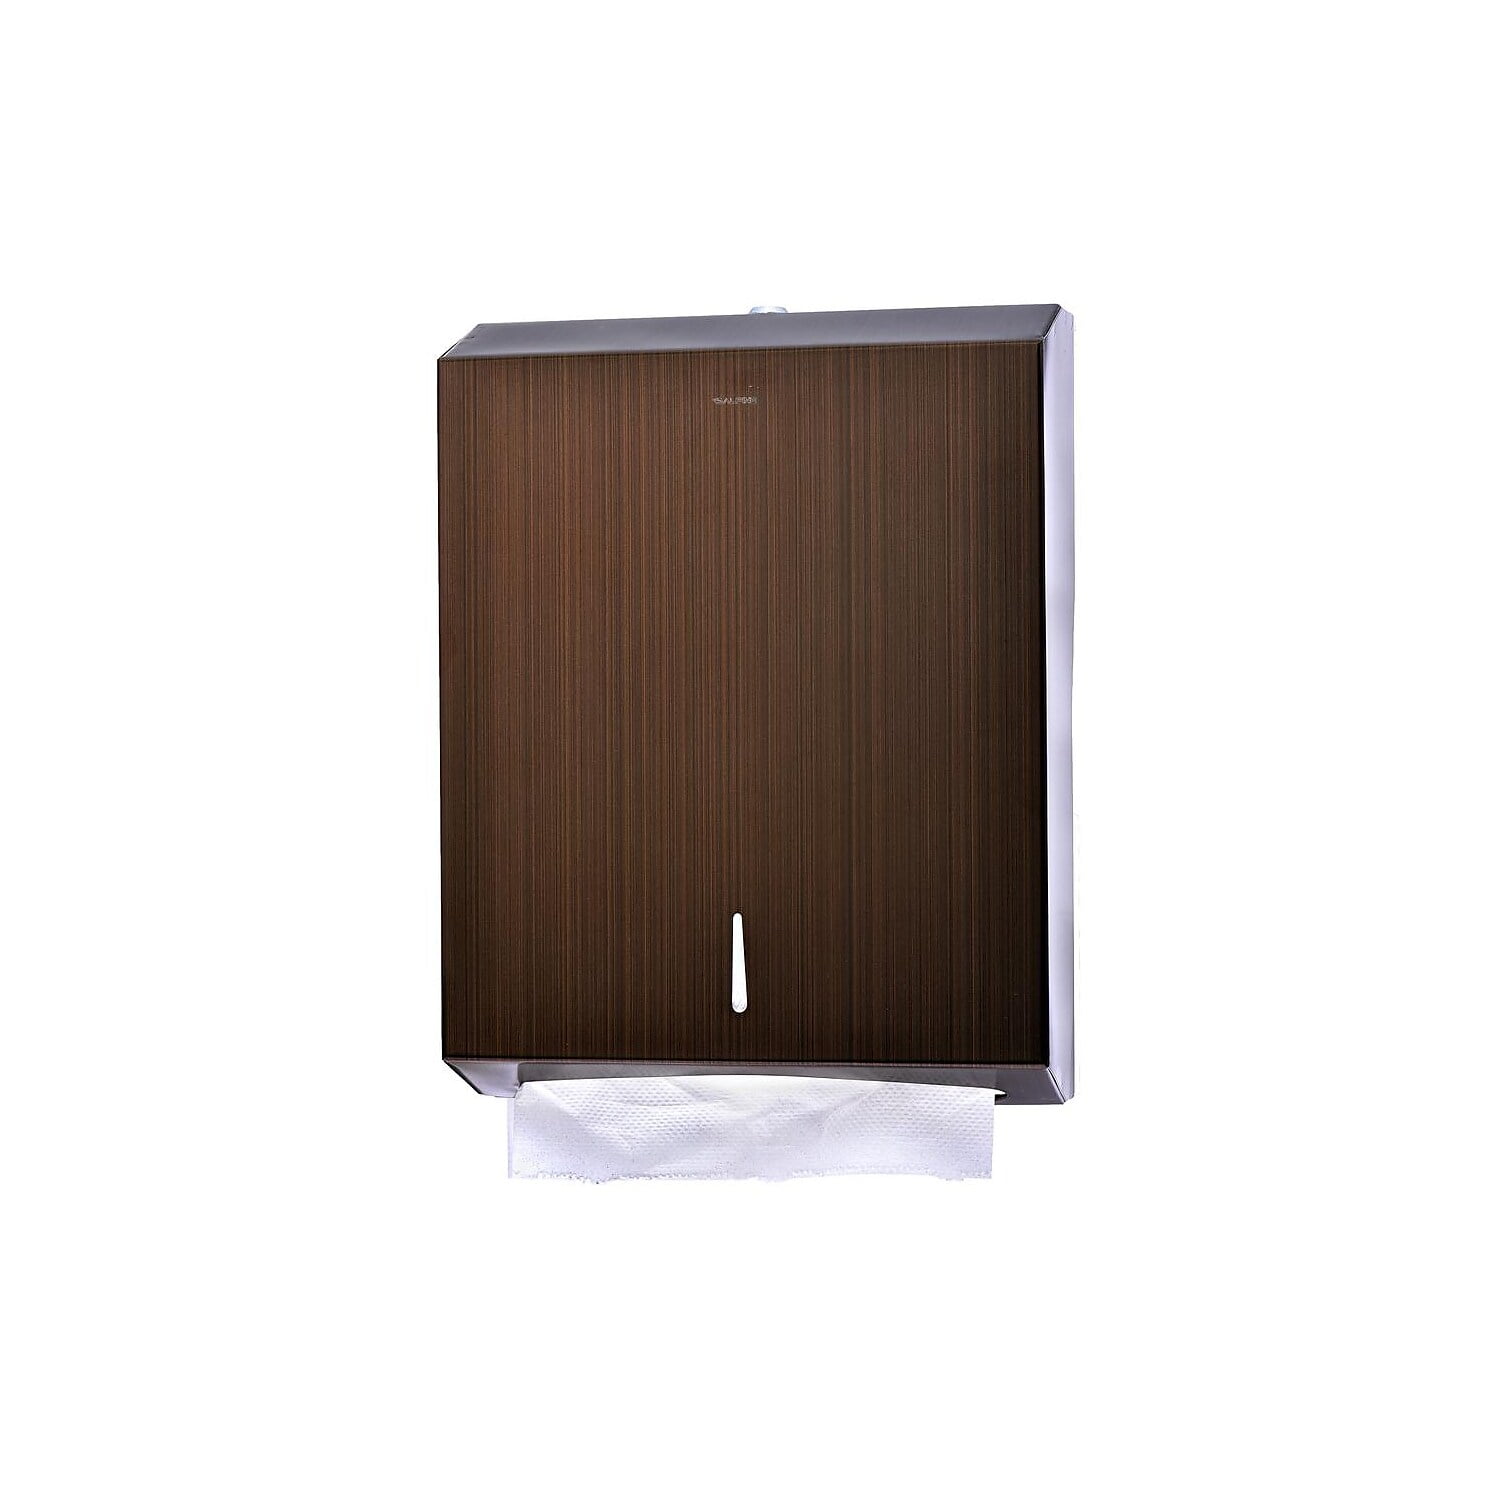 Alpine Industries Stainless Steel Brushed C-Fold/Multi-Fold Paper Towel Dispenser for sale online 